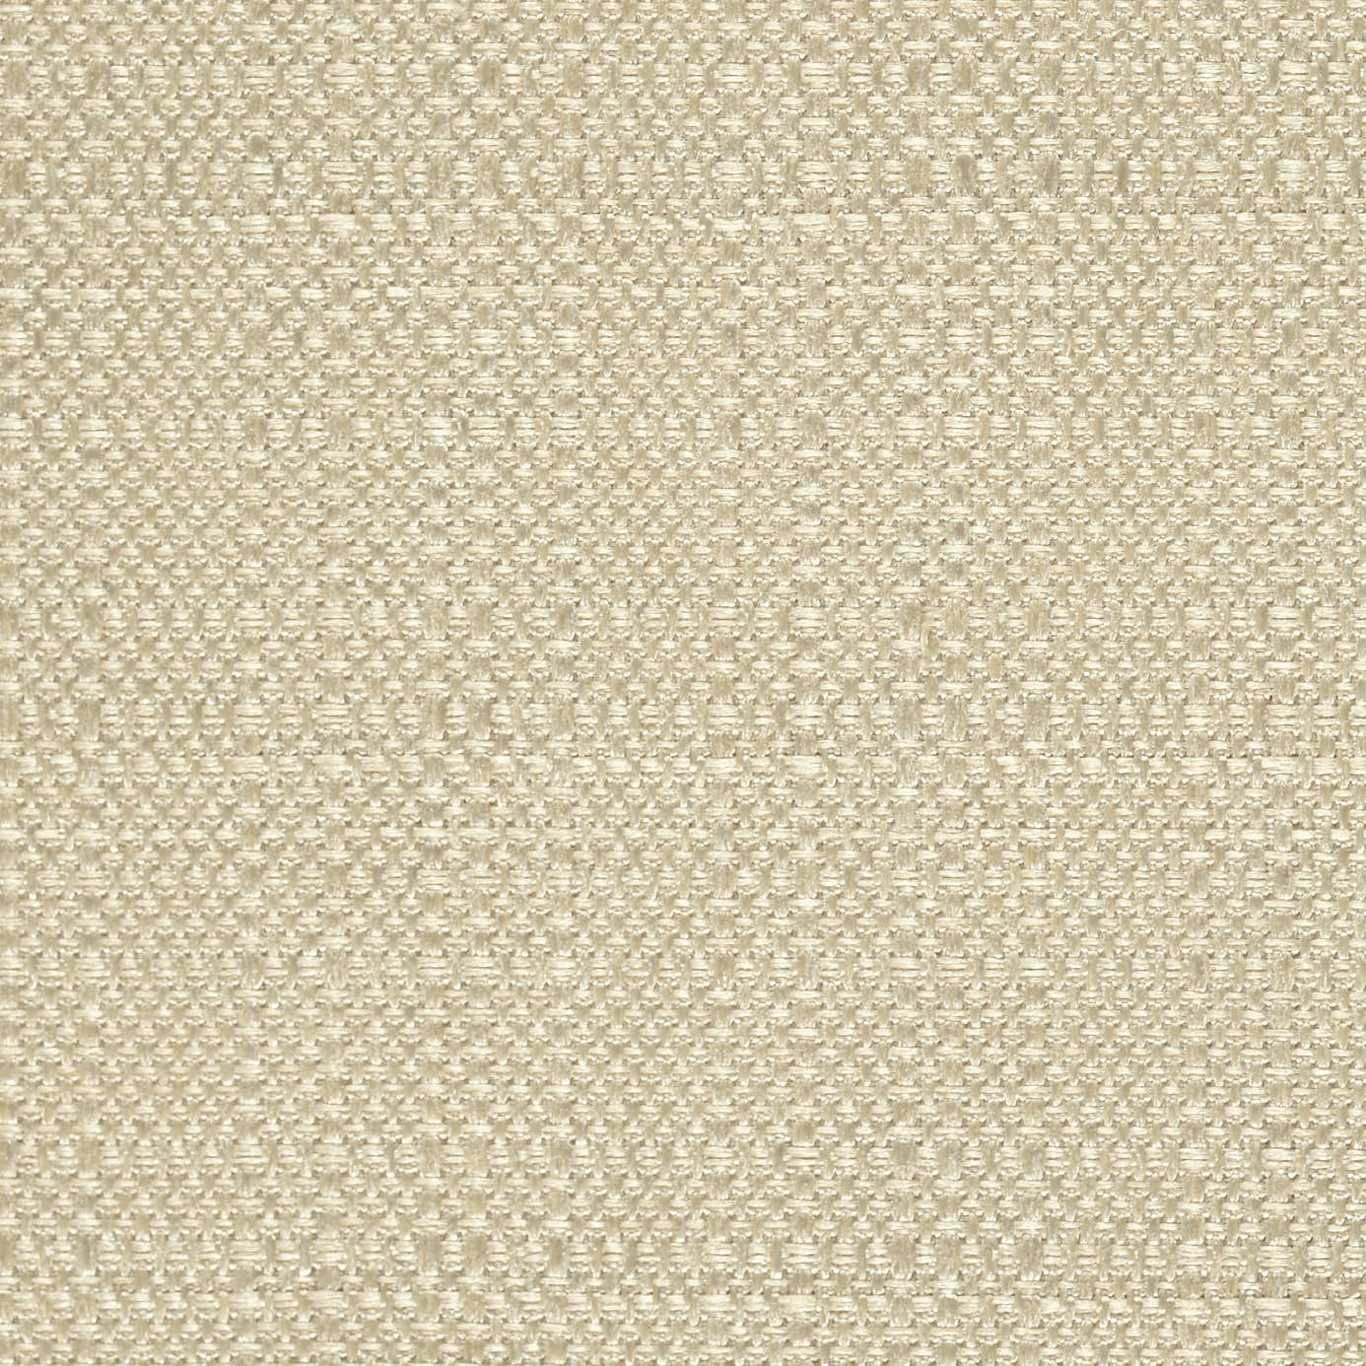 Ionic Sea Pearl Fabric by HAR